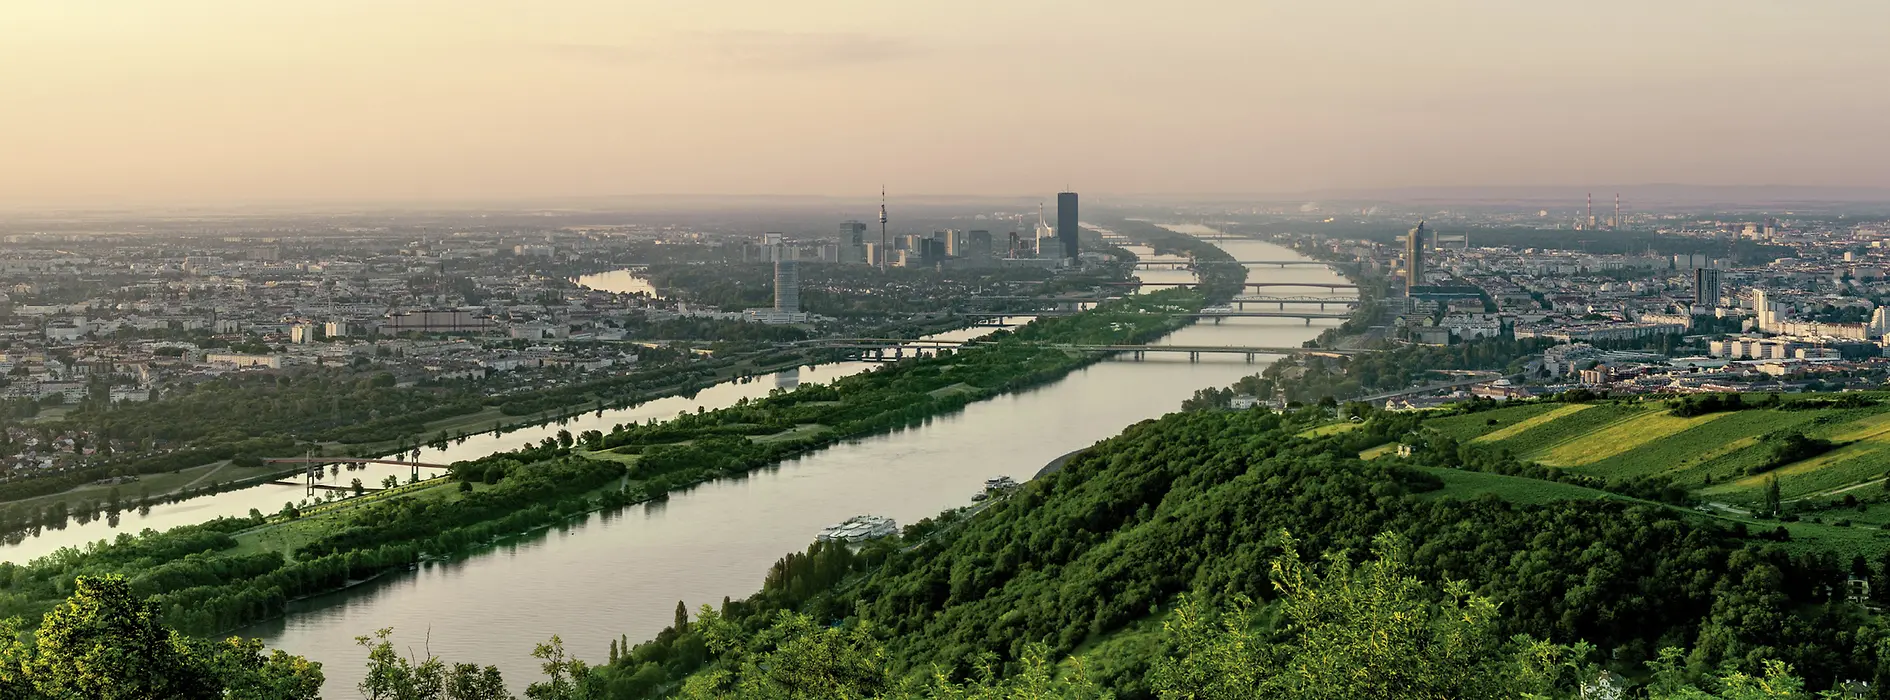 Pohled shora na Dunajský ostrov a Vídeň